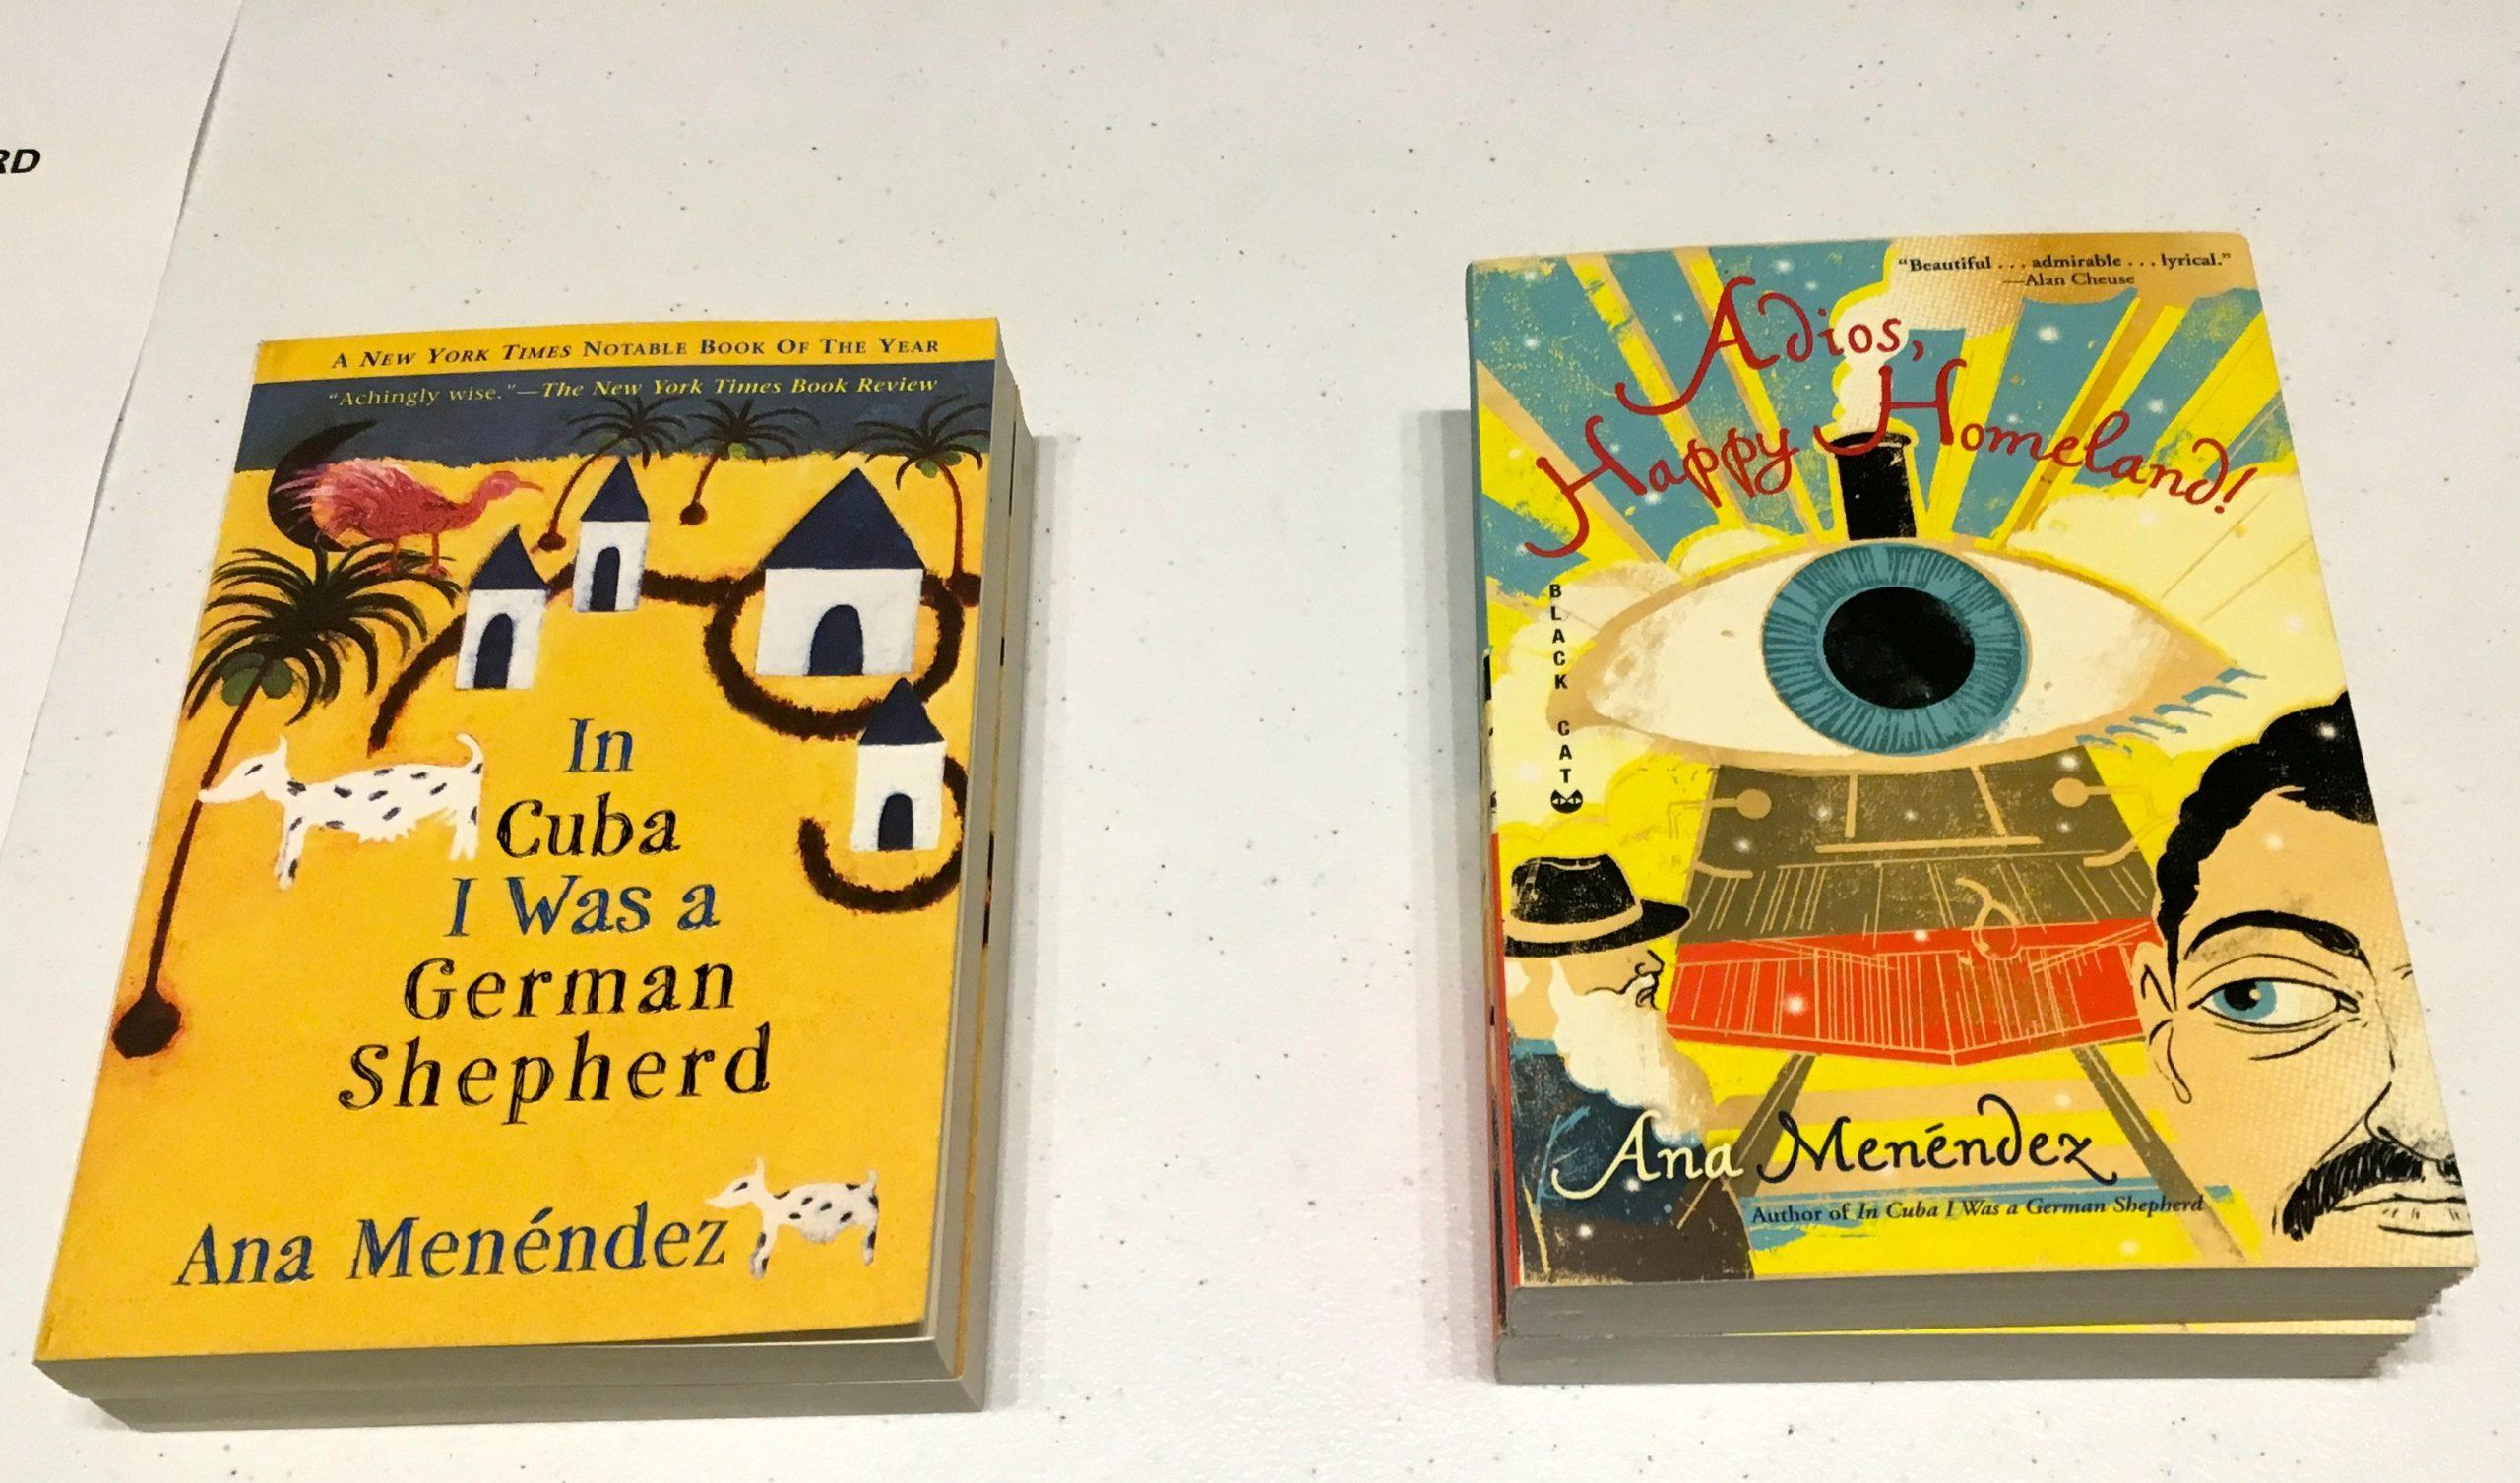 Copies of Menendez's books were sold. 